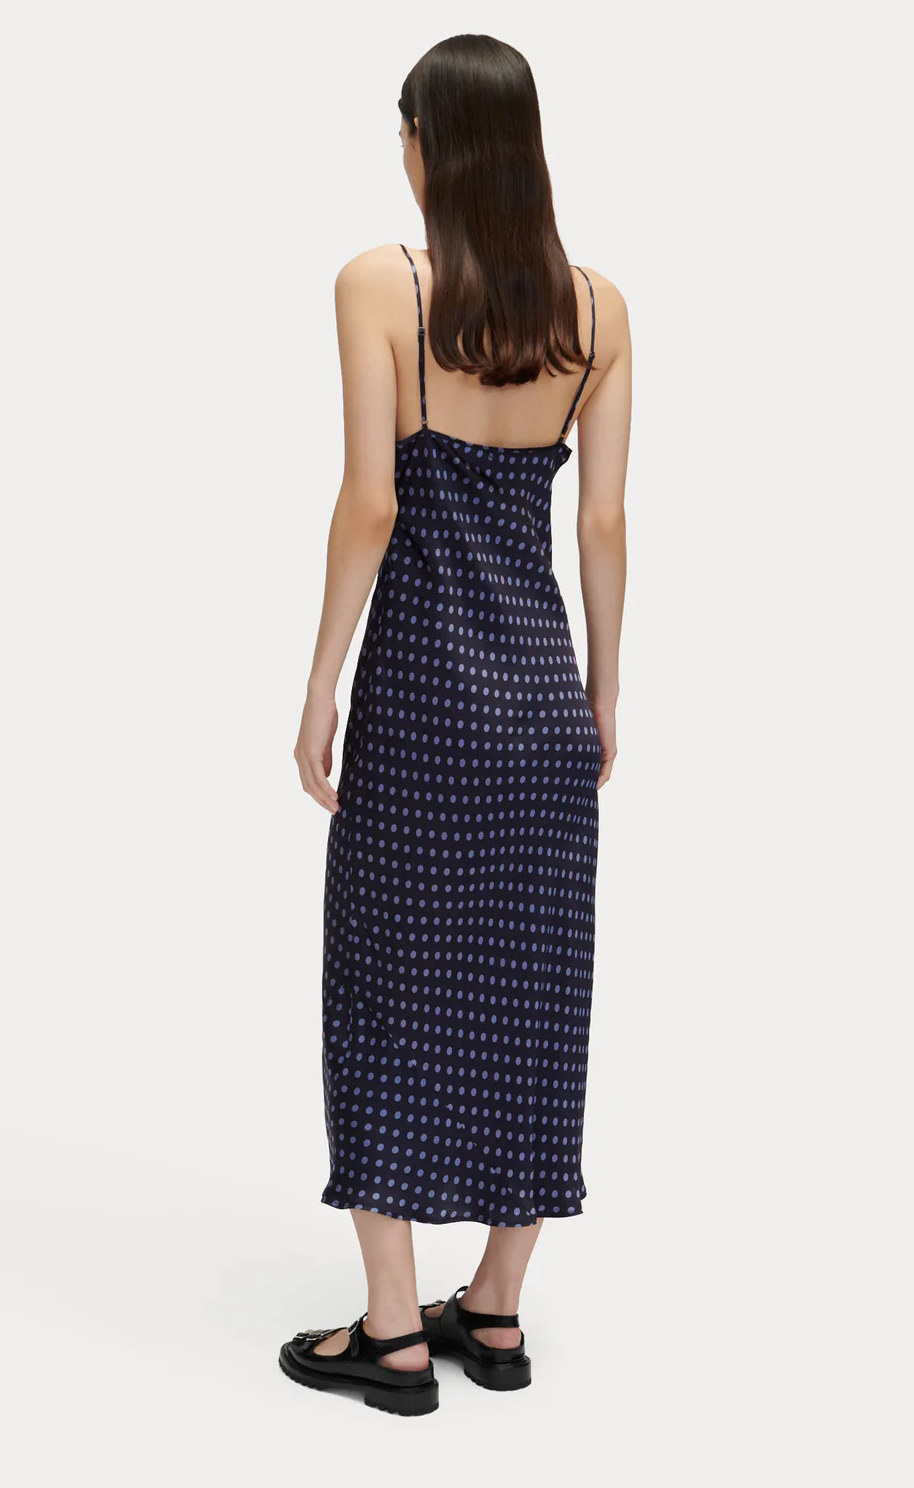 Rachel Comey :: Wren Dress (Polka Dot)